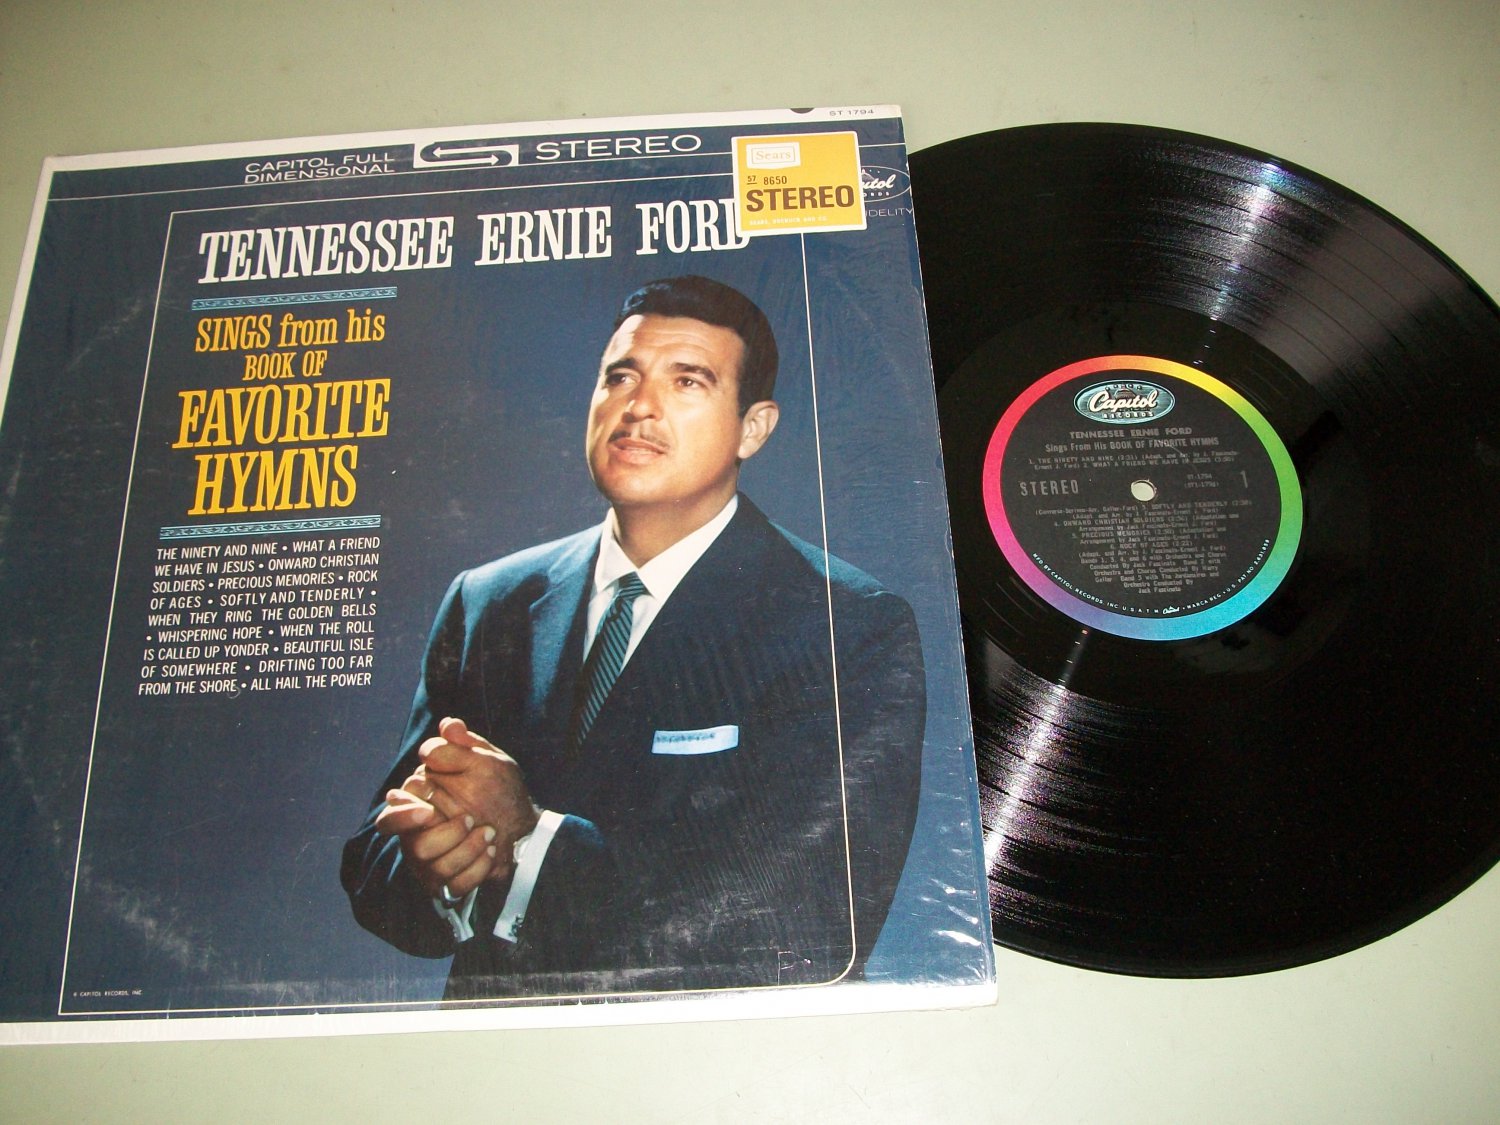 Tennessee ernie ford hymns vinyl #10